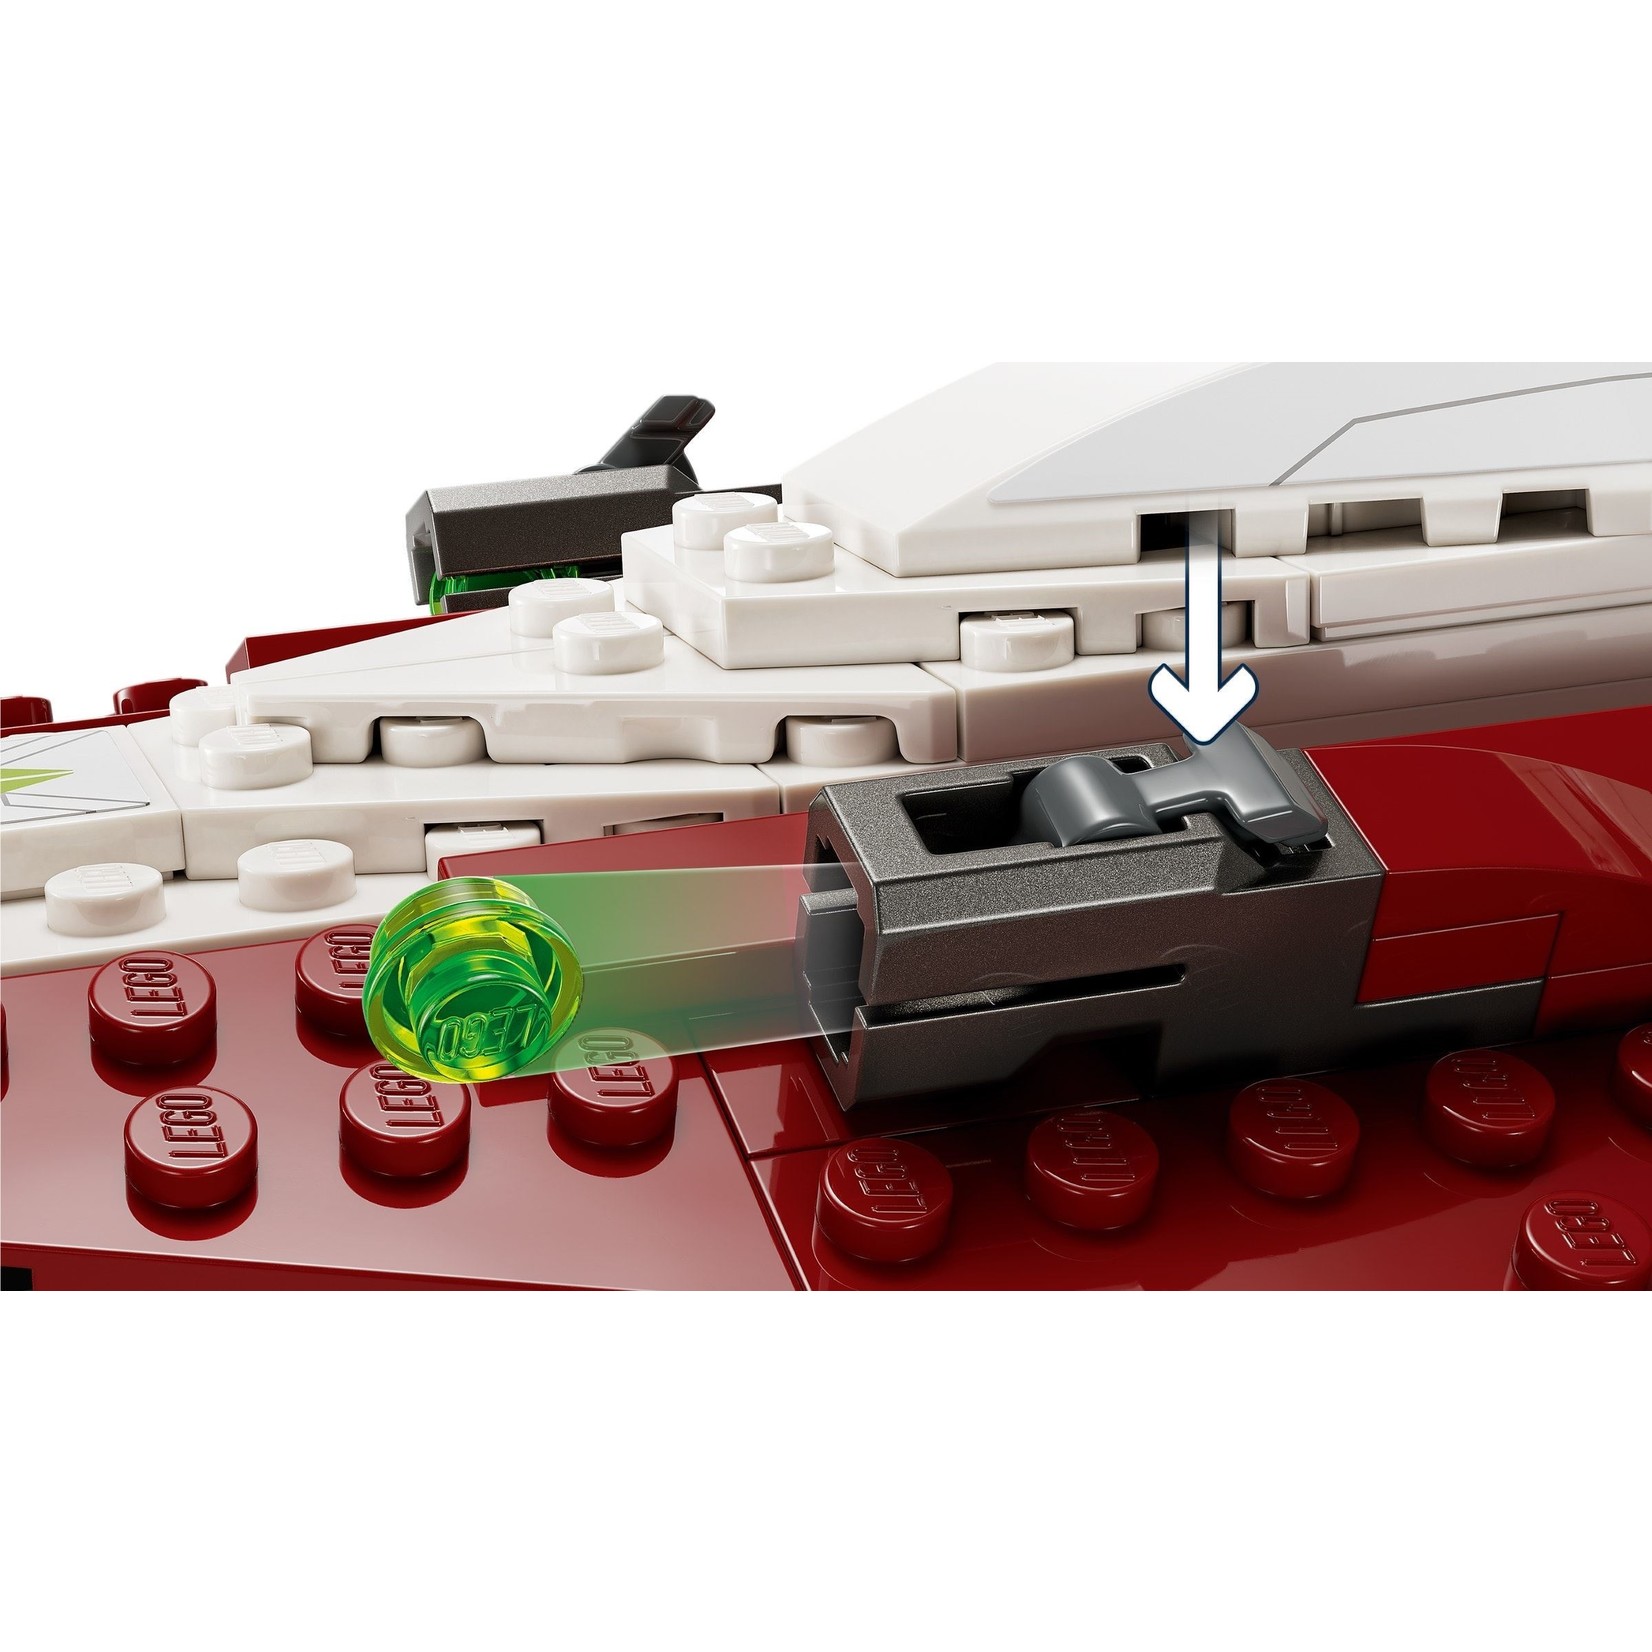 LEGO De Jedi Starfighter van Obi-Wan Kenobi - 75333